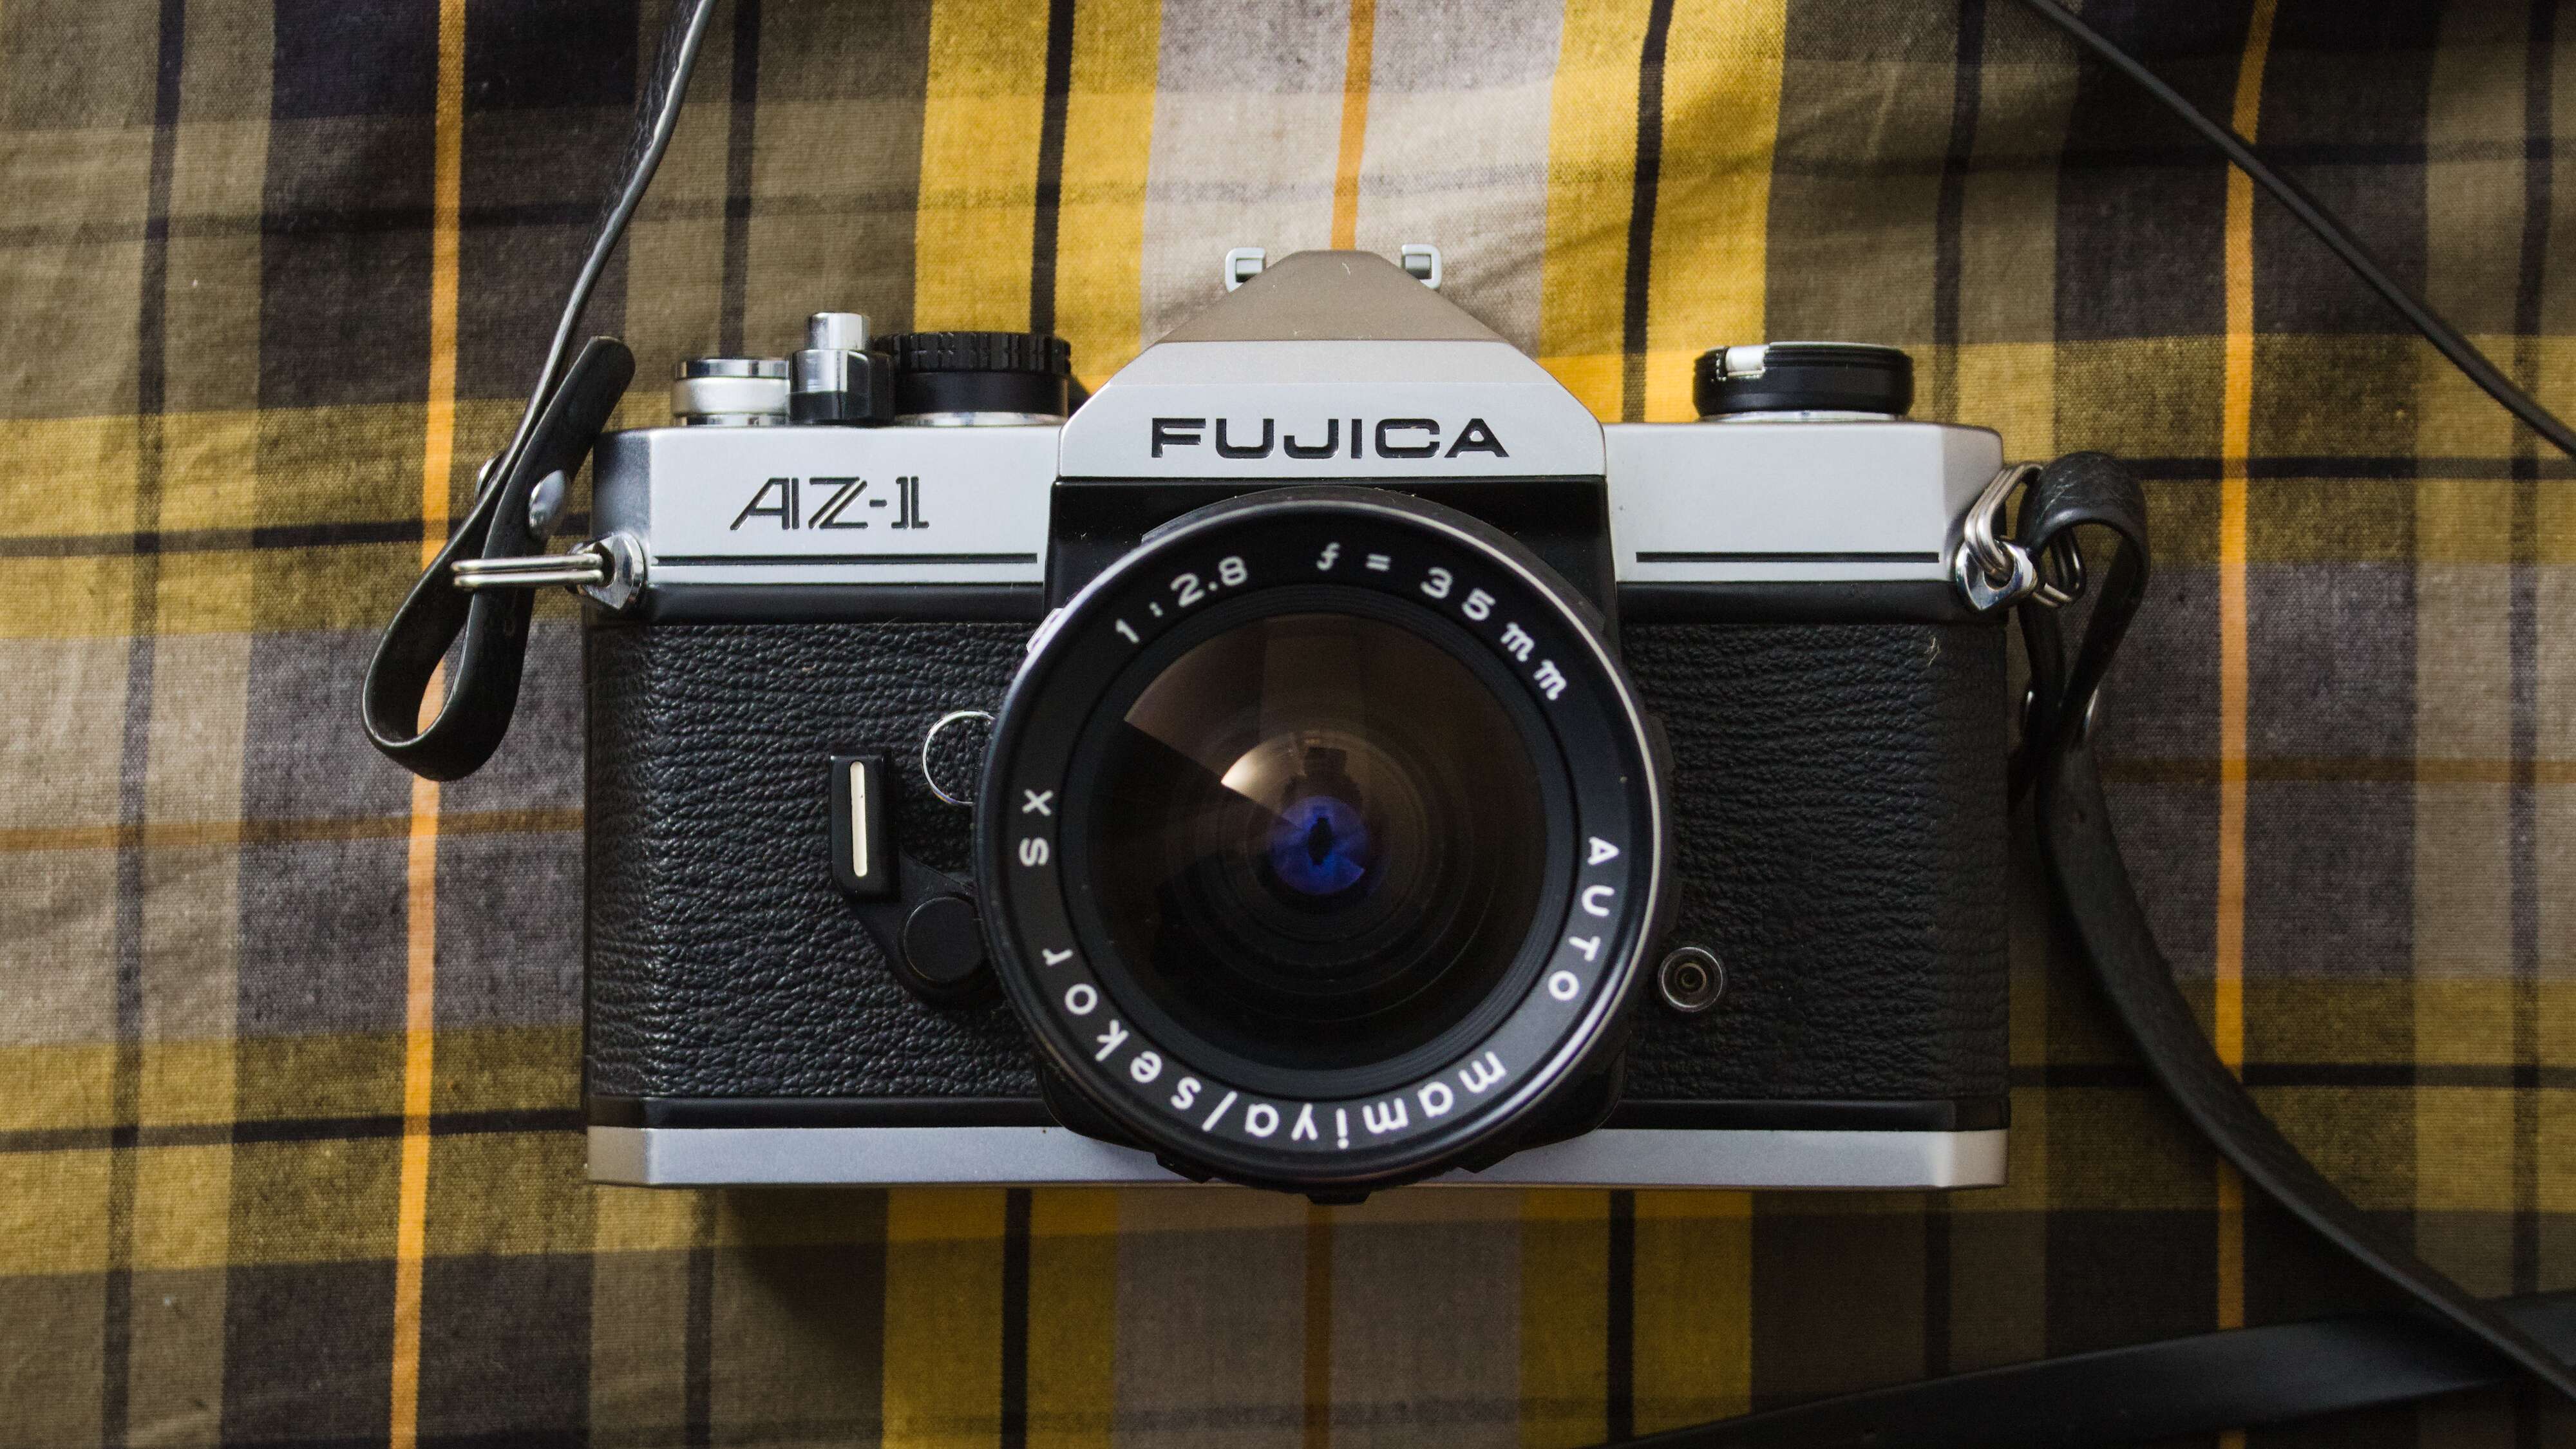 Wonderfully Odd: Fujica AZ-1 and the Mamiya Sekor Lens